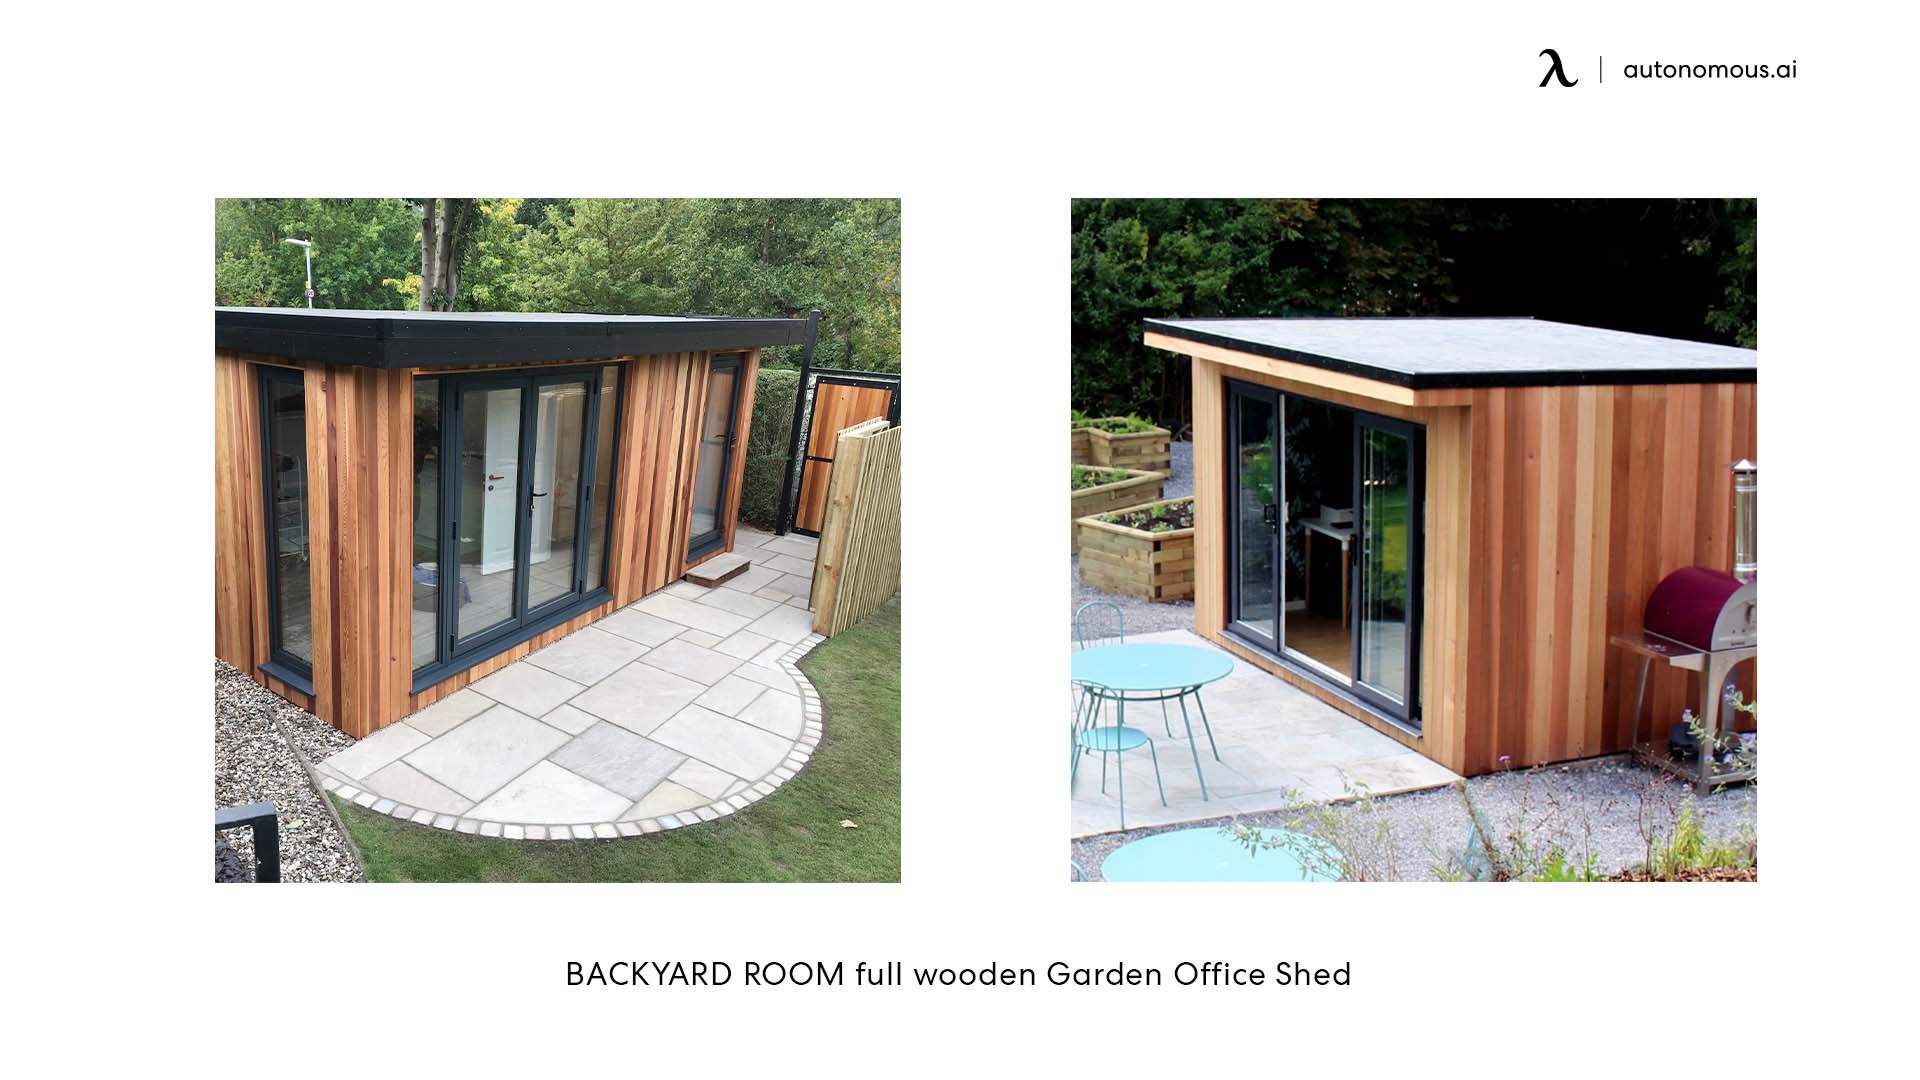 BACKYARD ROON full wooden Garden Office Shed